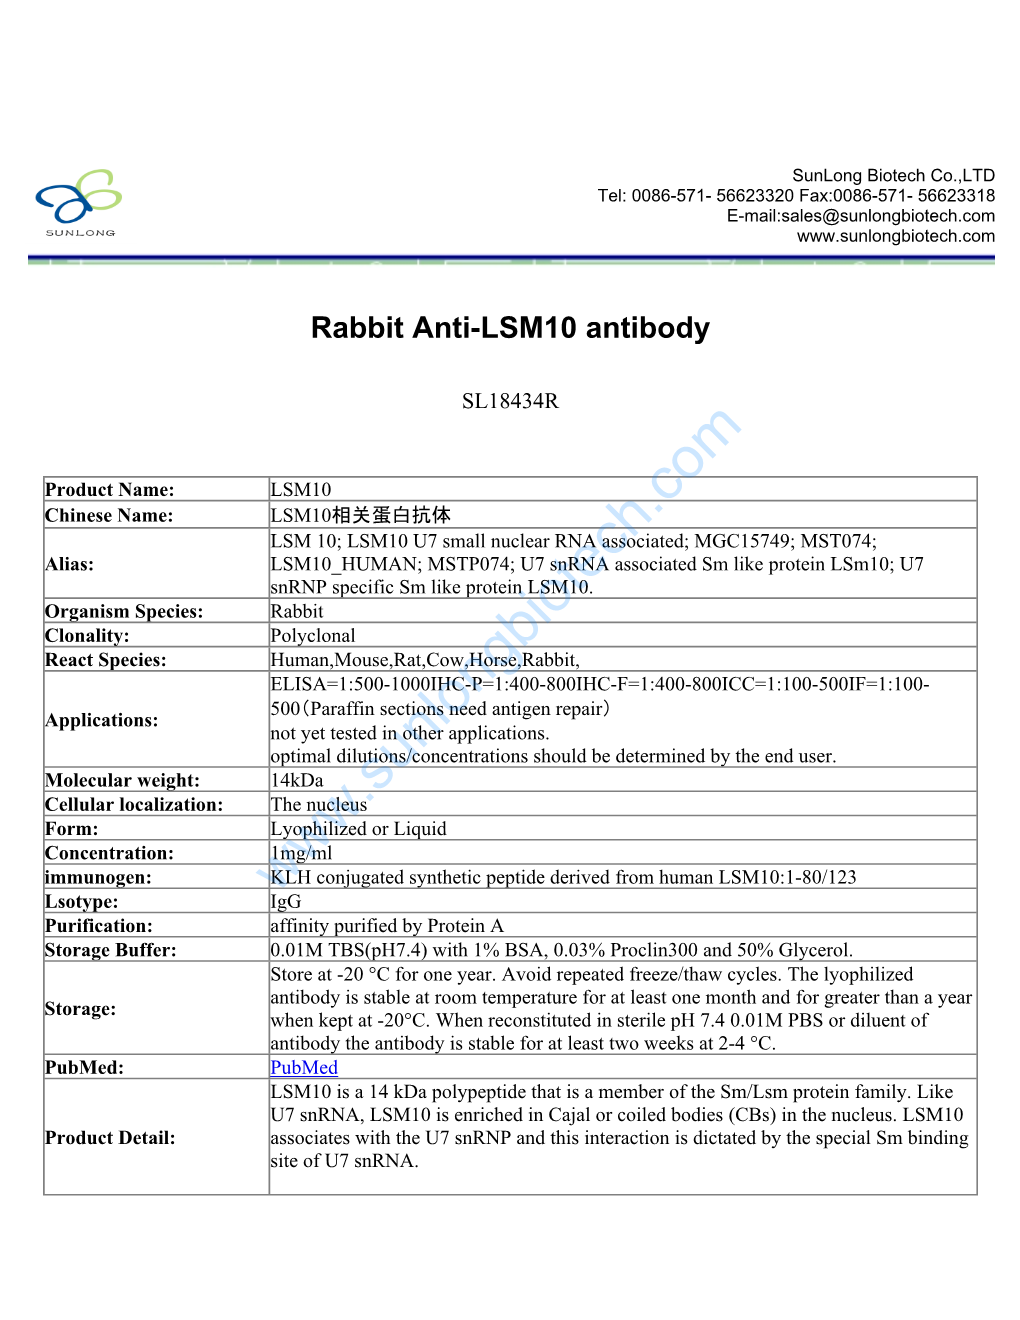 Rabbit Anti-LSM10 Antibody-SL18434R